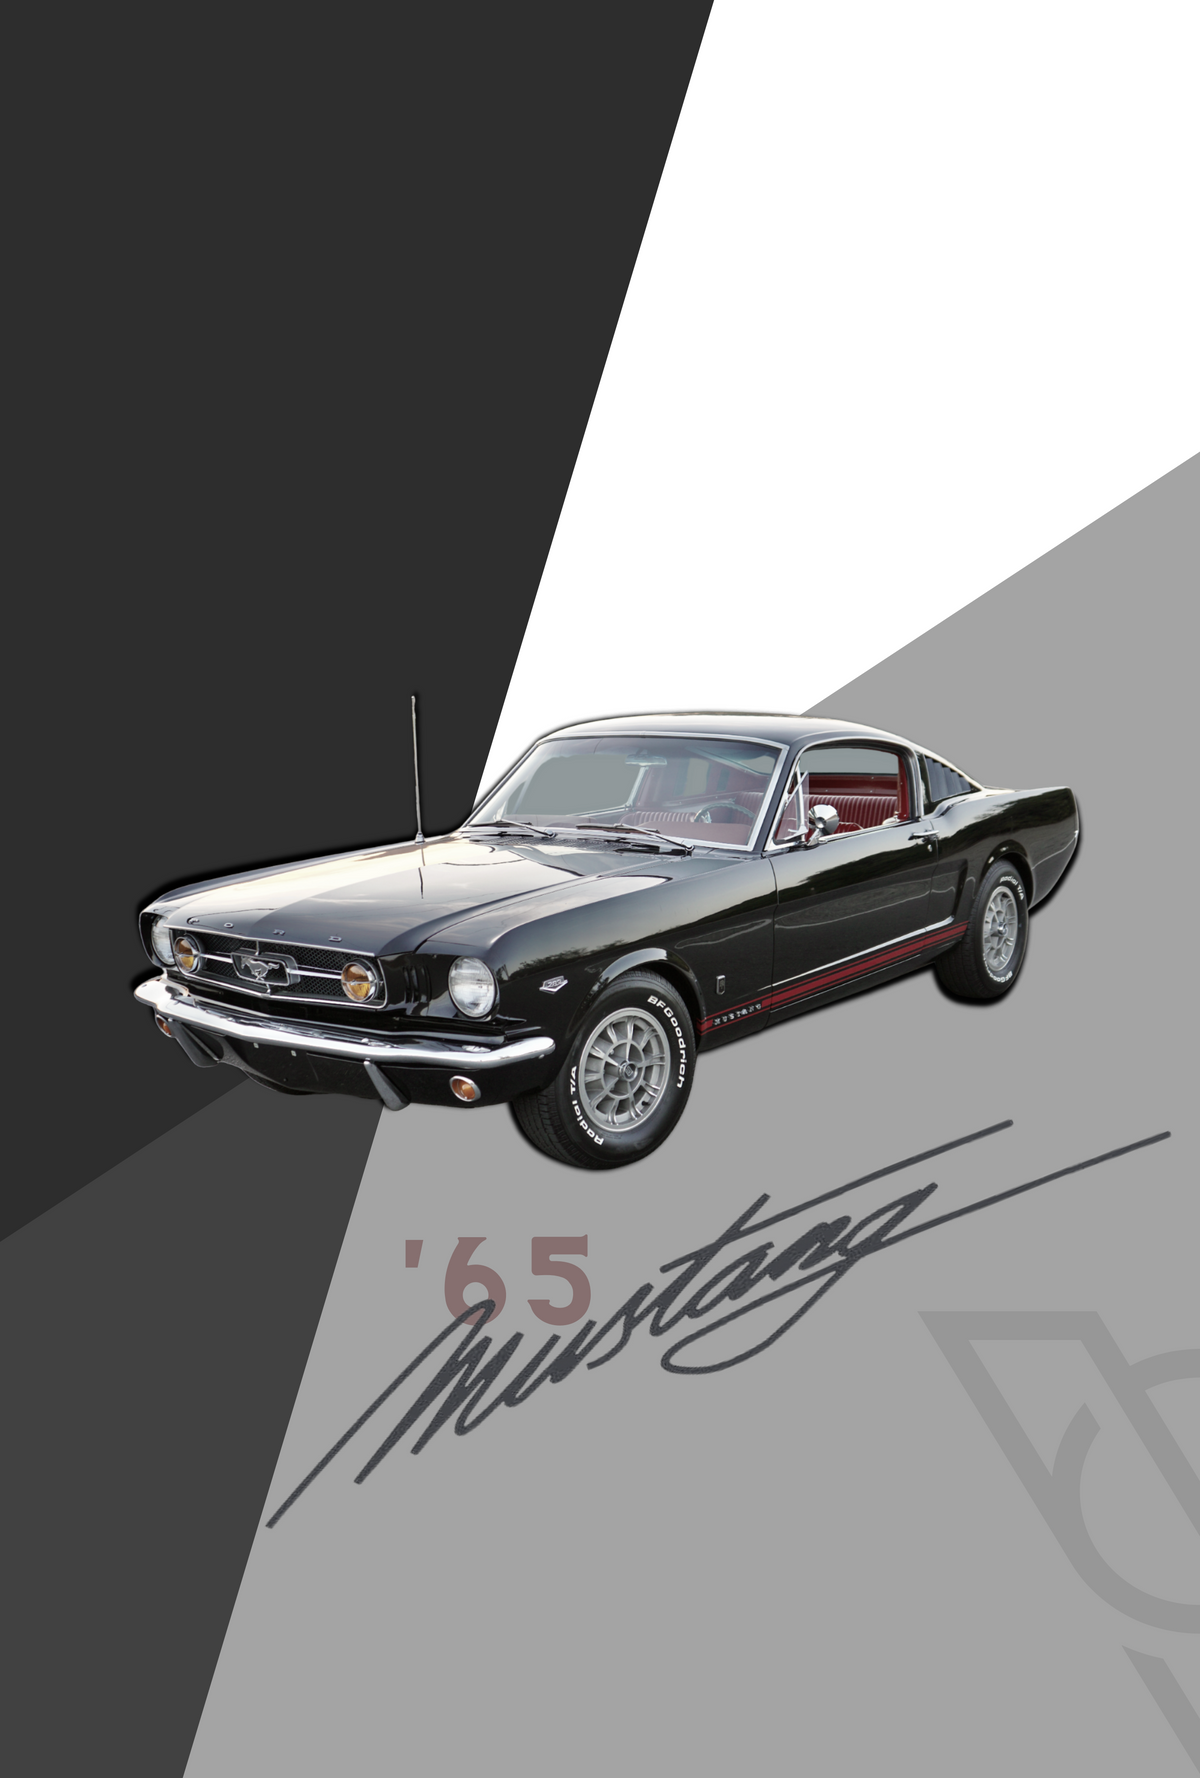 65 Mustang (POSTER)